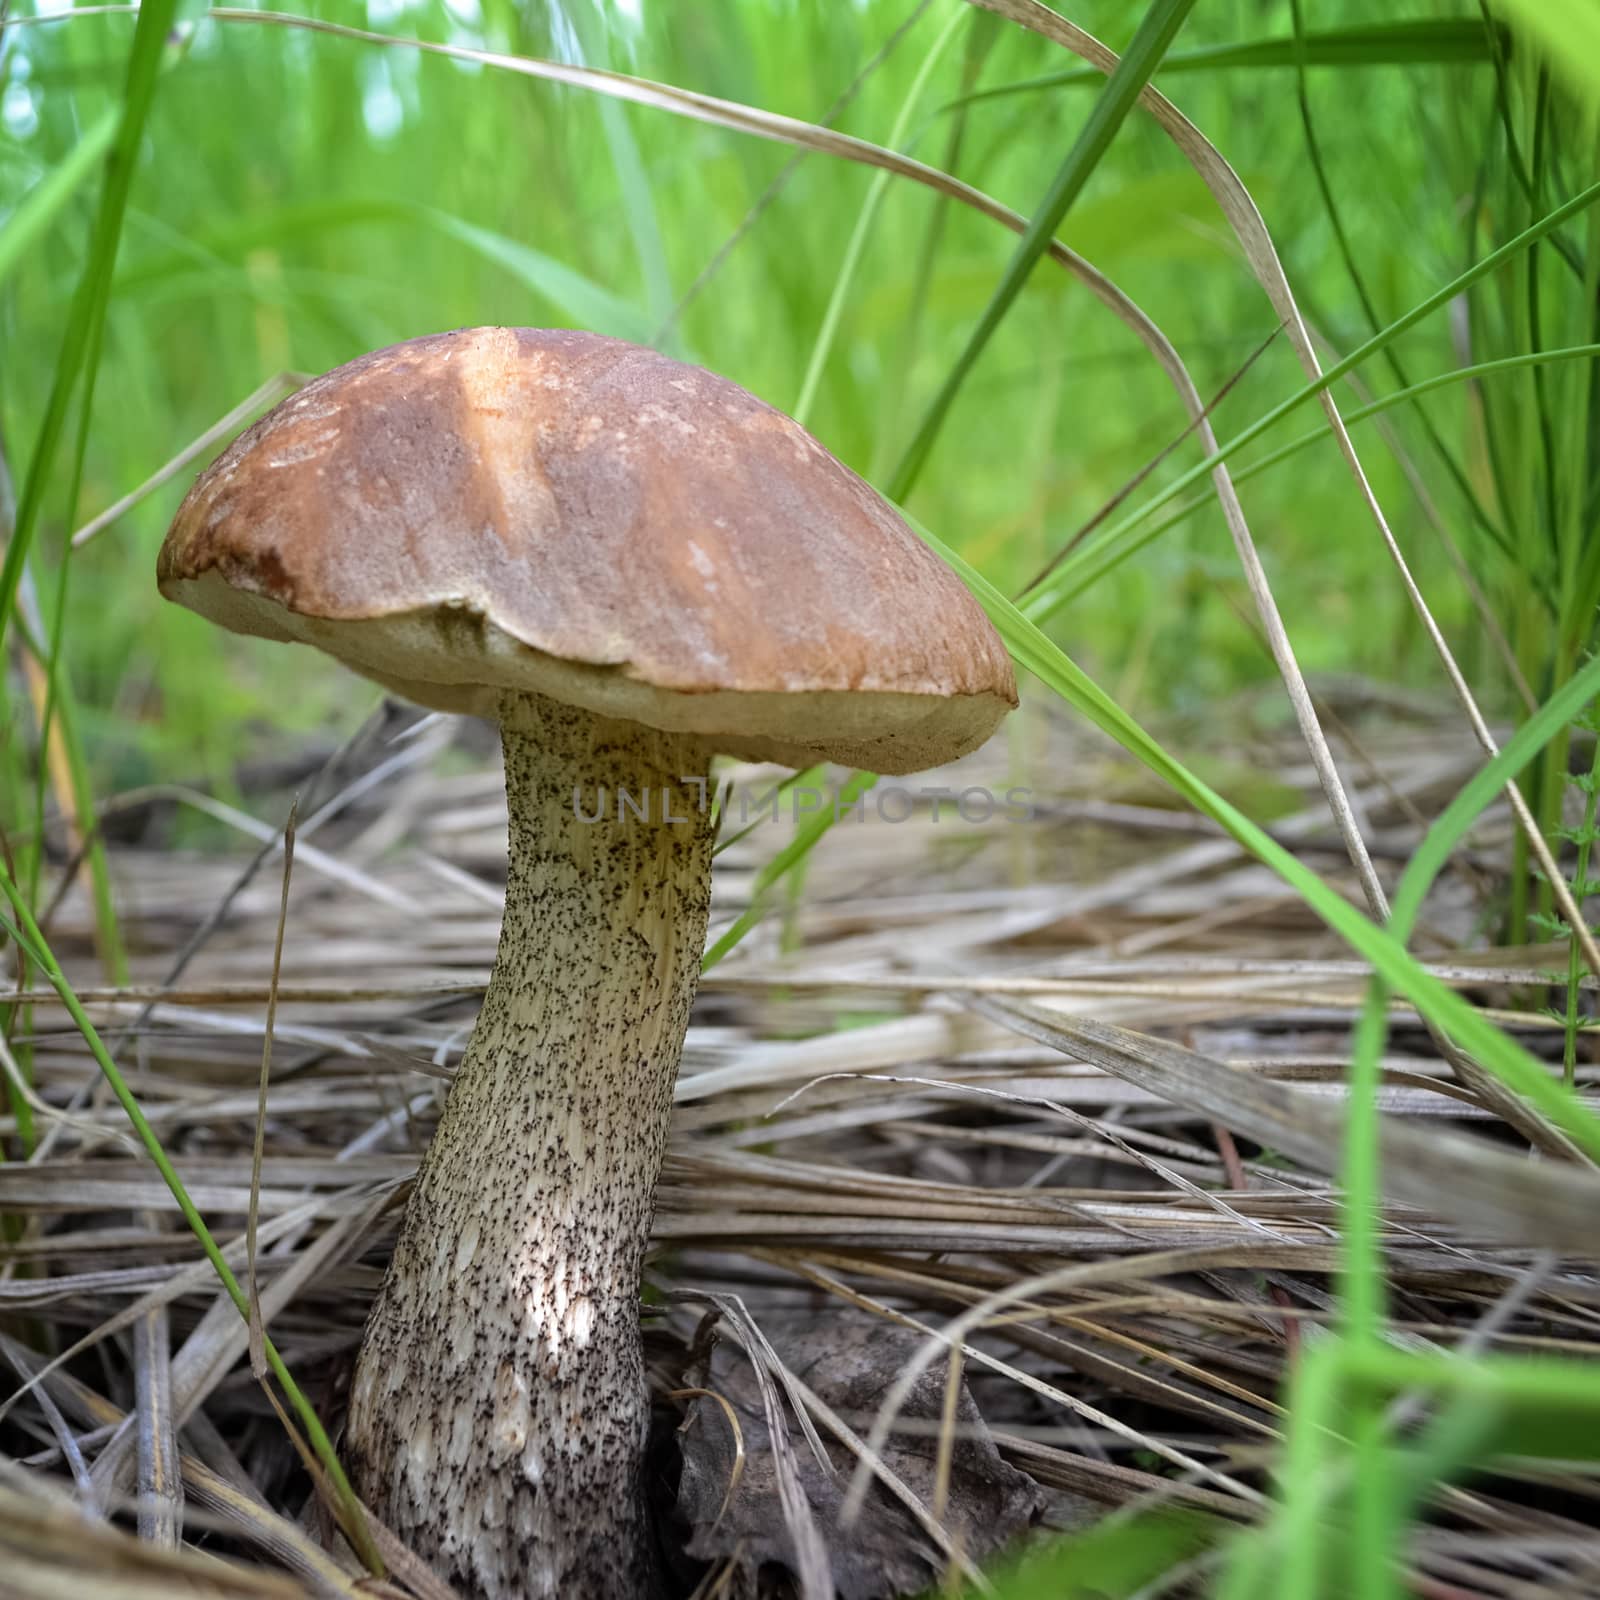 Boletus mushroom growing in the grass by Gaina